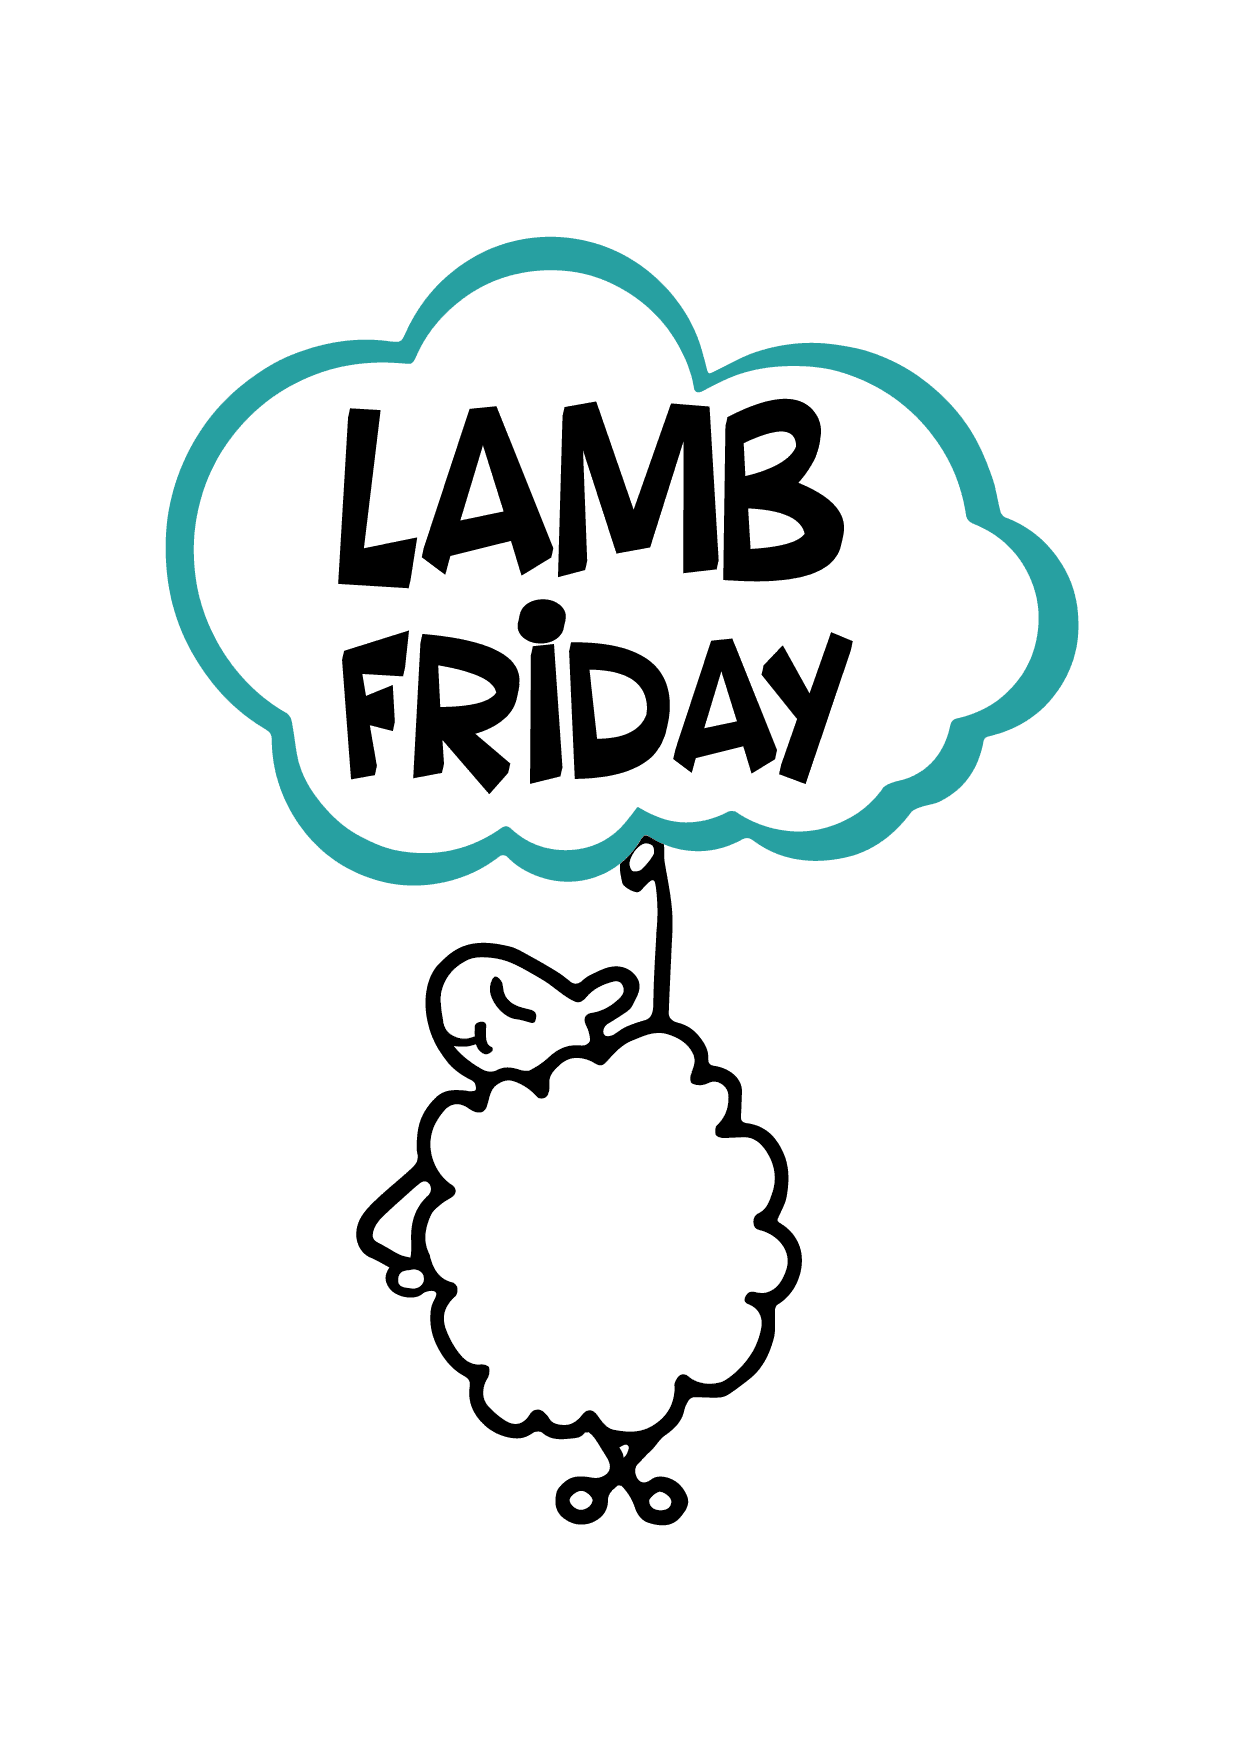 Lamb Friday